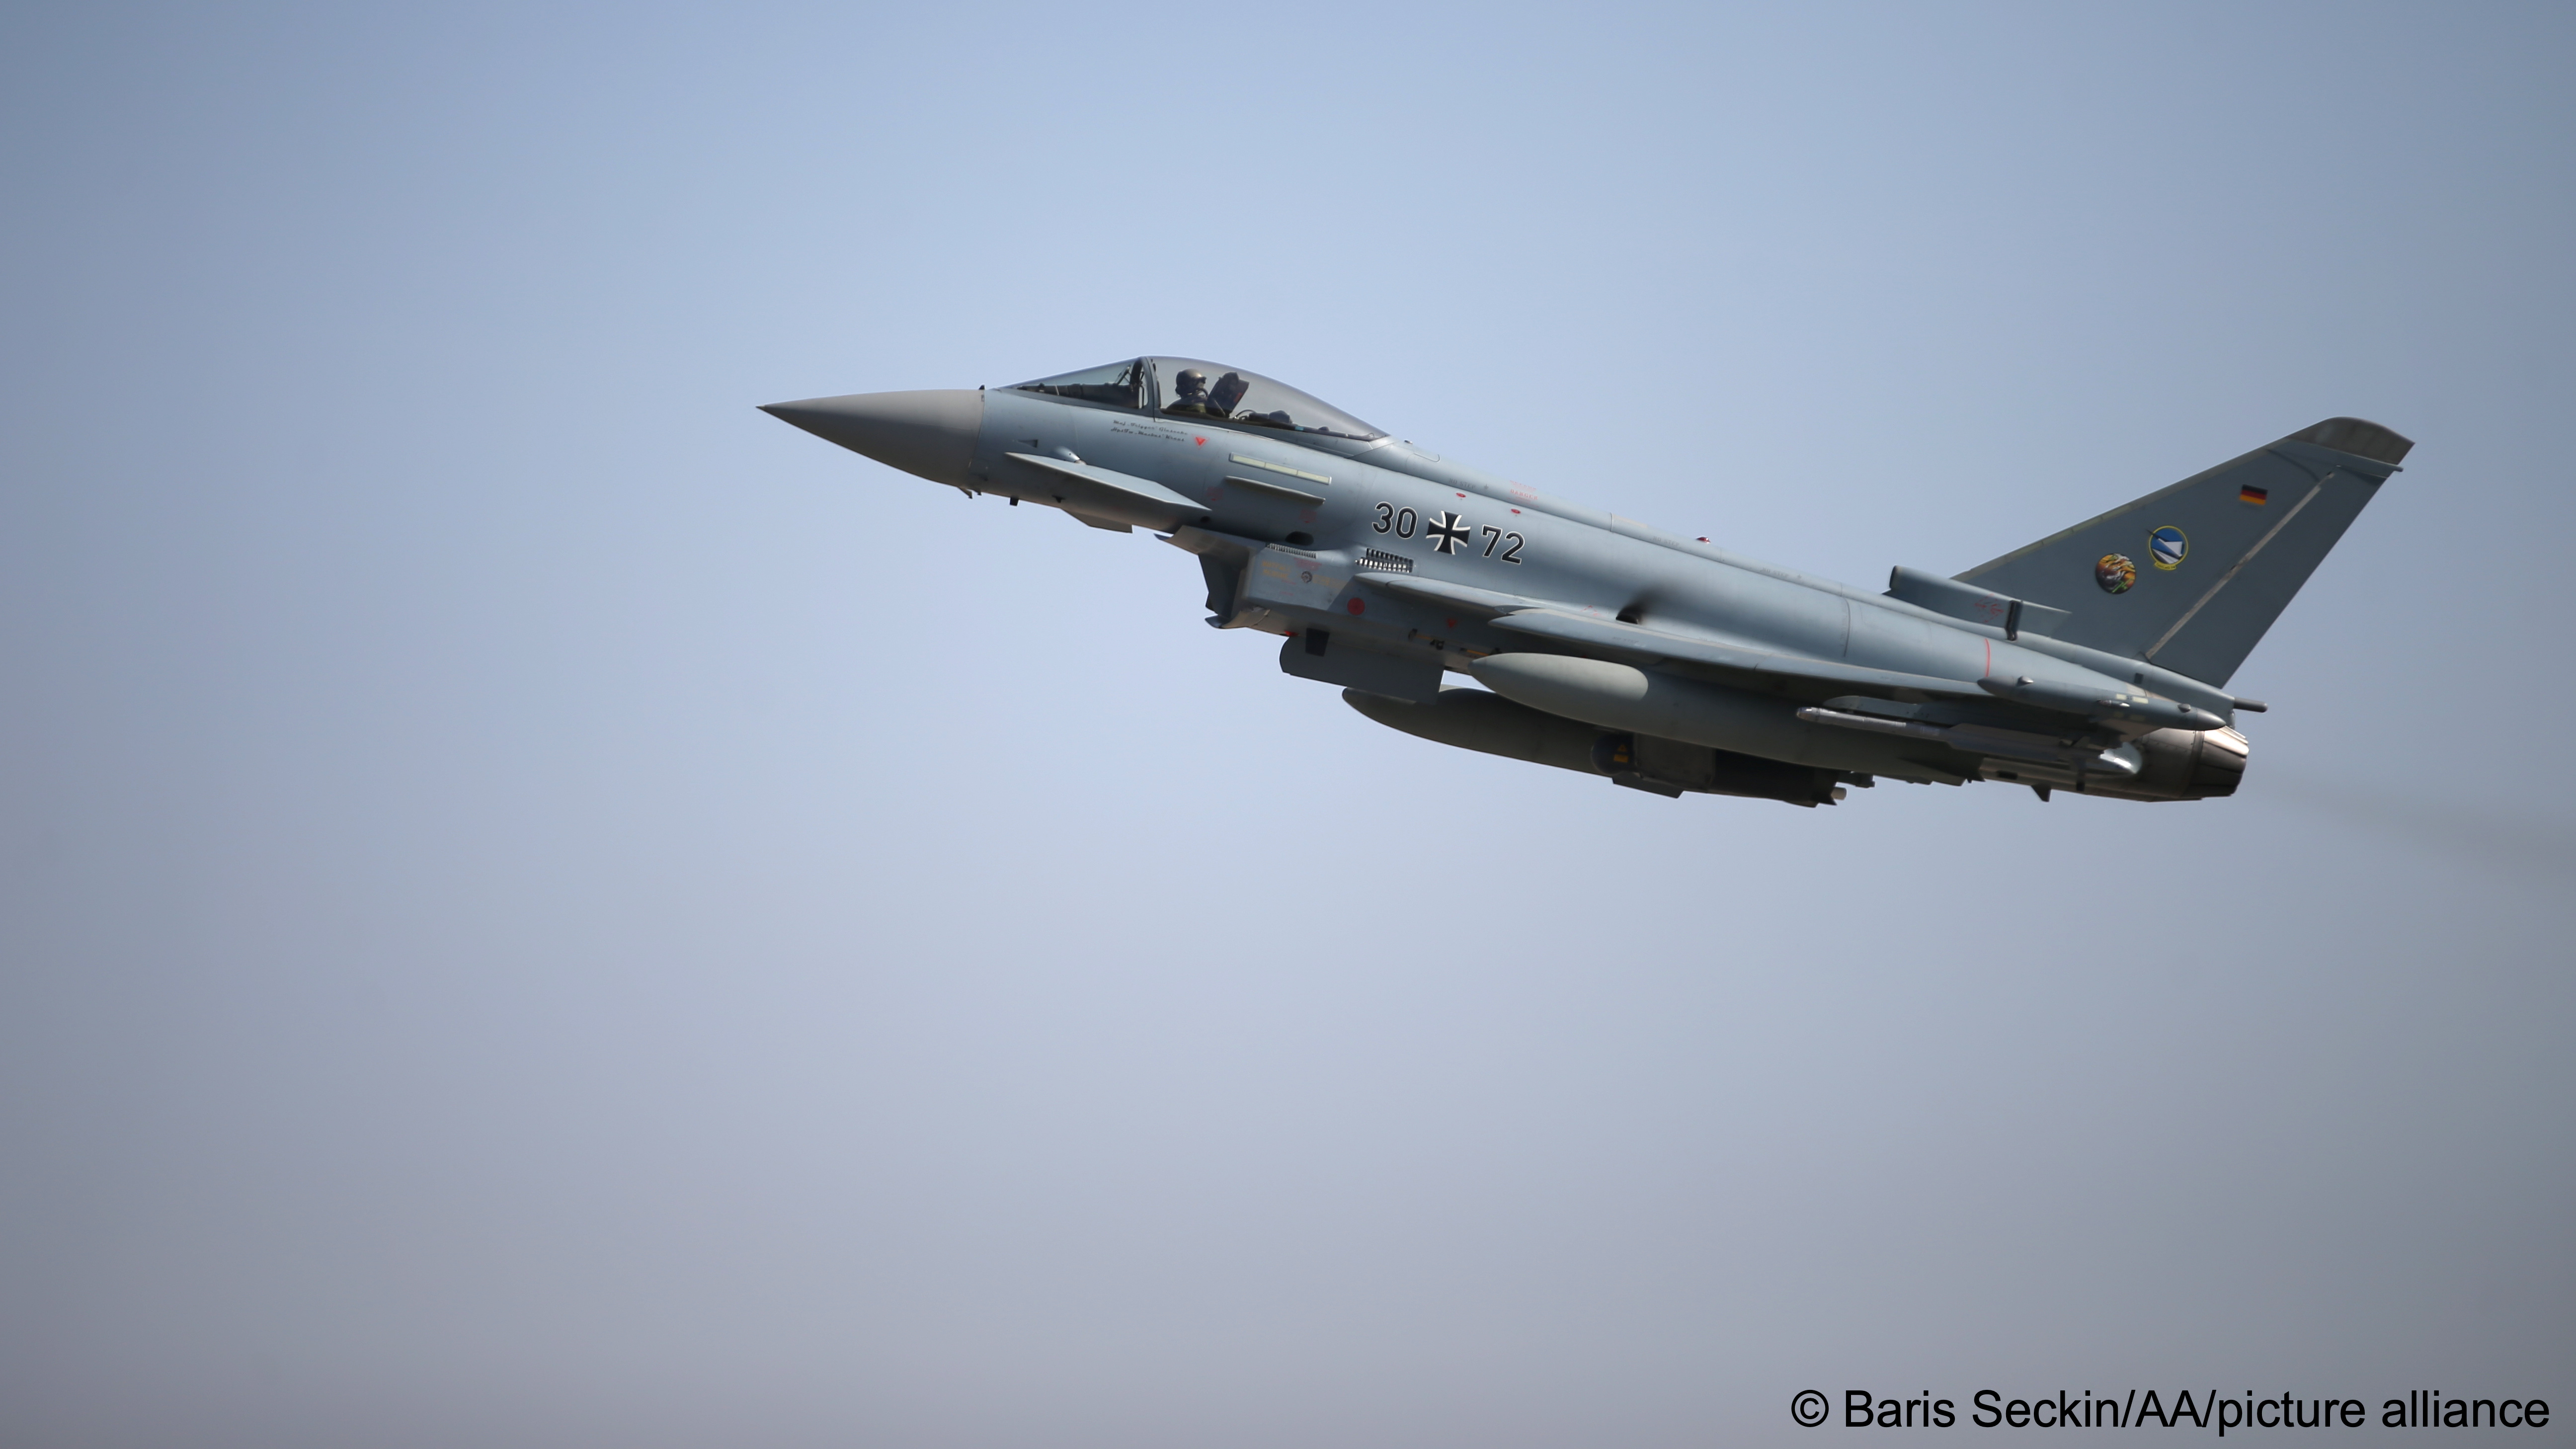 A German Air Force Eurofighter Typhoon fighter jet flies across a grey sky